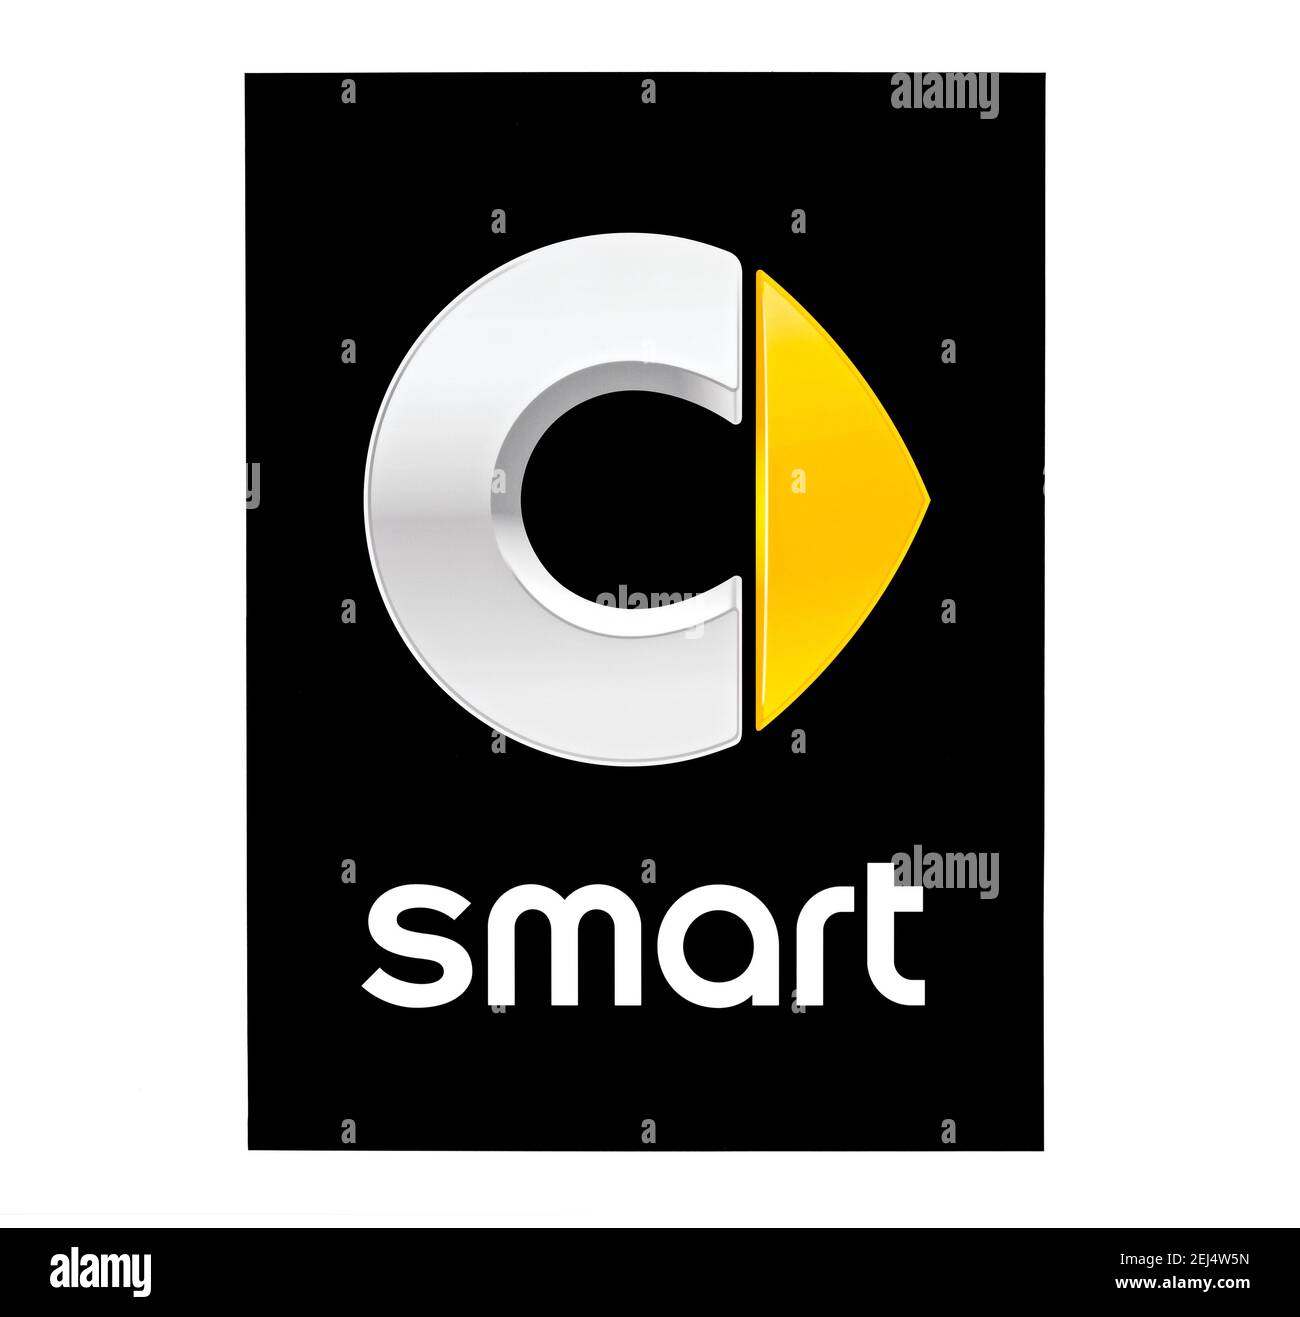 https://c8.alamy.com/comp/2EJ4W5N/logo-of-the-car-brand-smart-cutout-on-white-background-2EJ4W5N.jpg